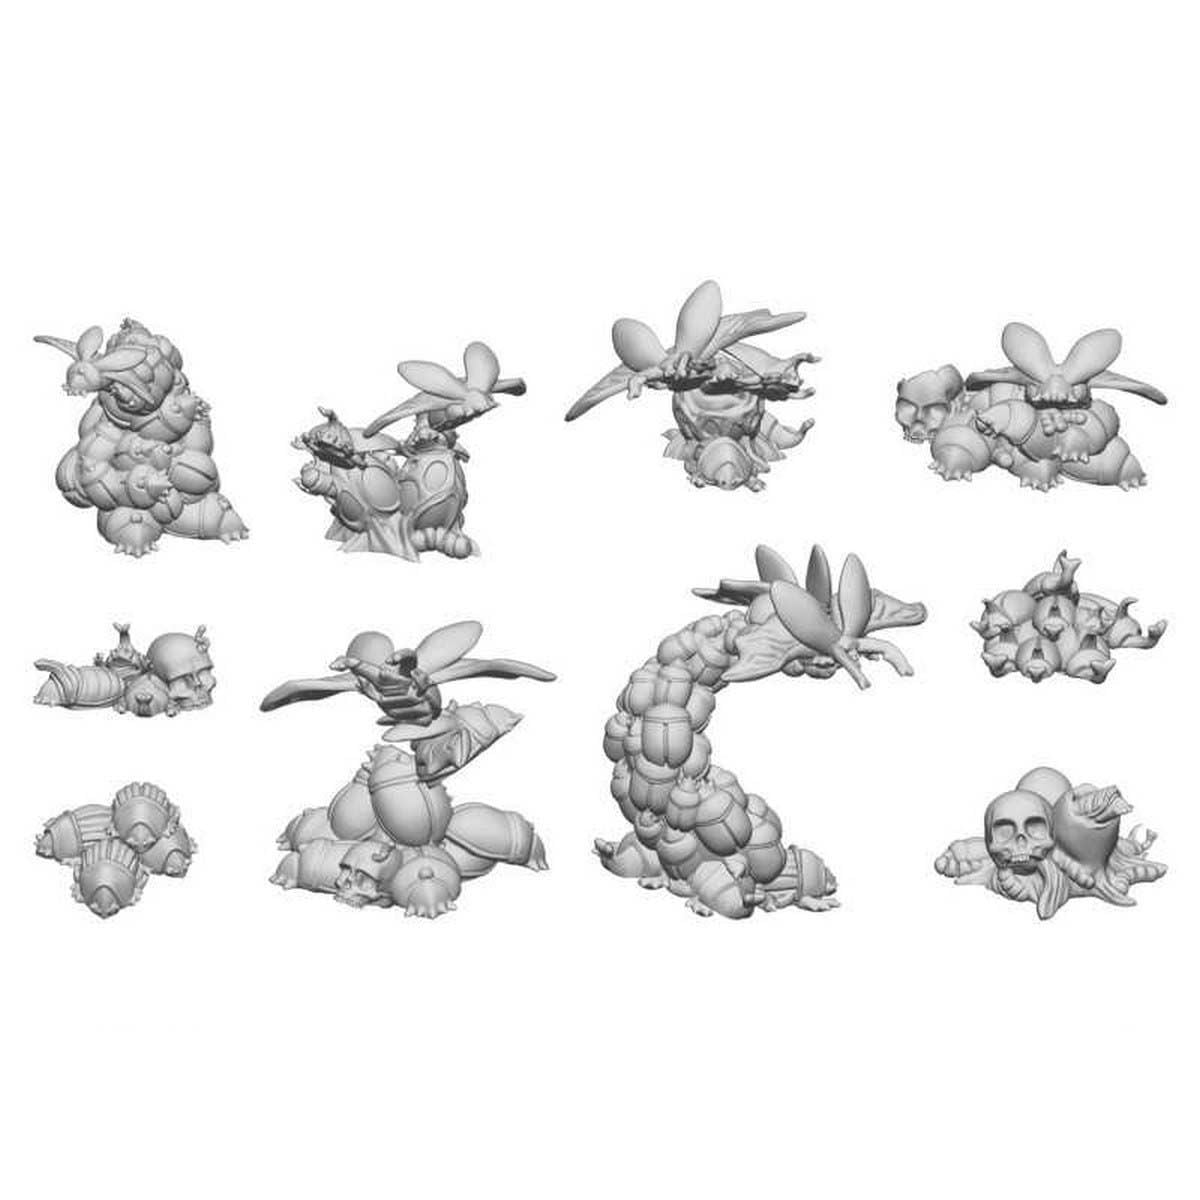 3D Printed Set - Swarm of Scarabs